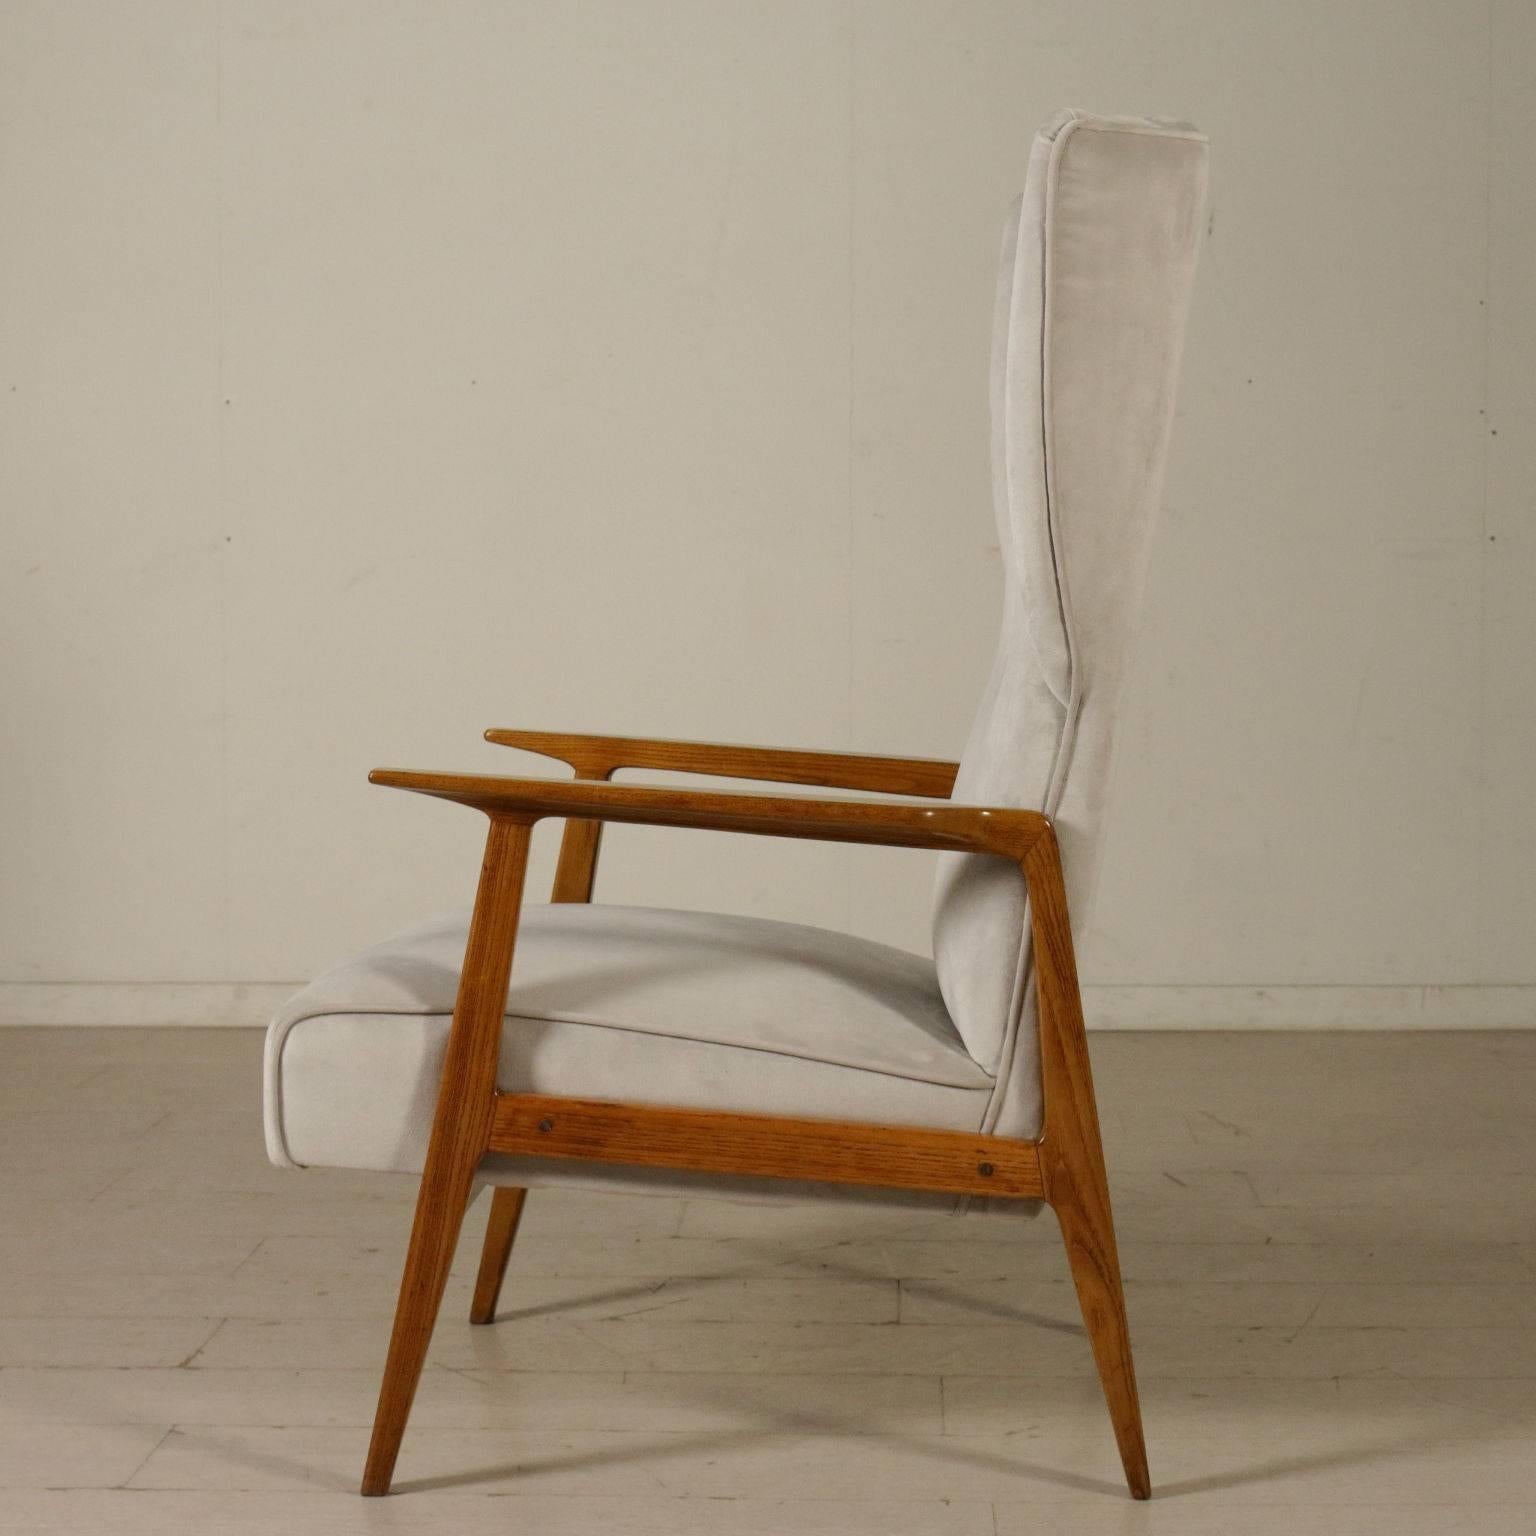 An armchair, oak, foam padding, velvet upholstery. Manufactured in Italy, 1950s.